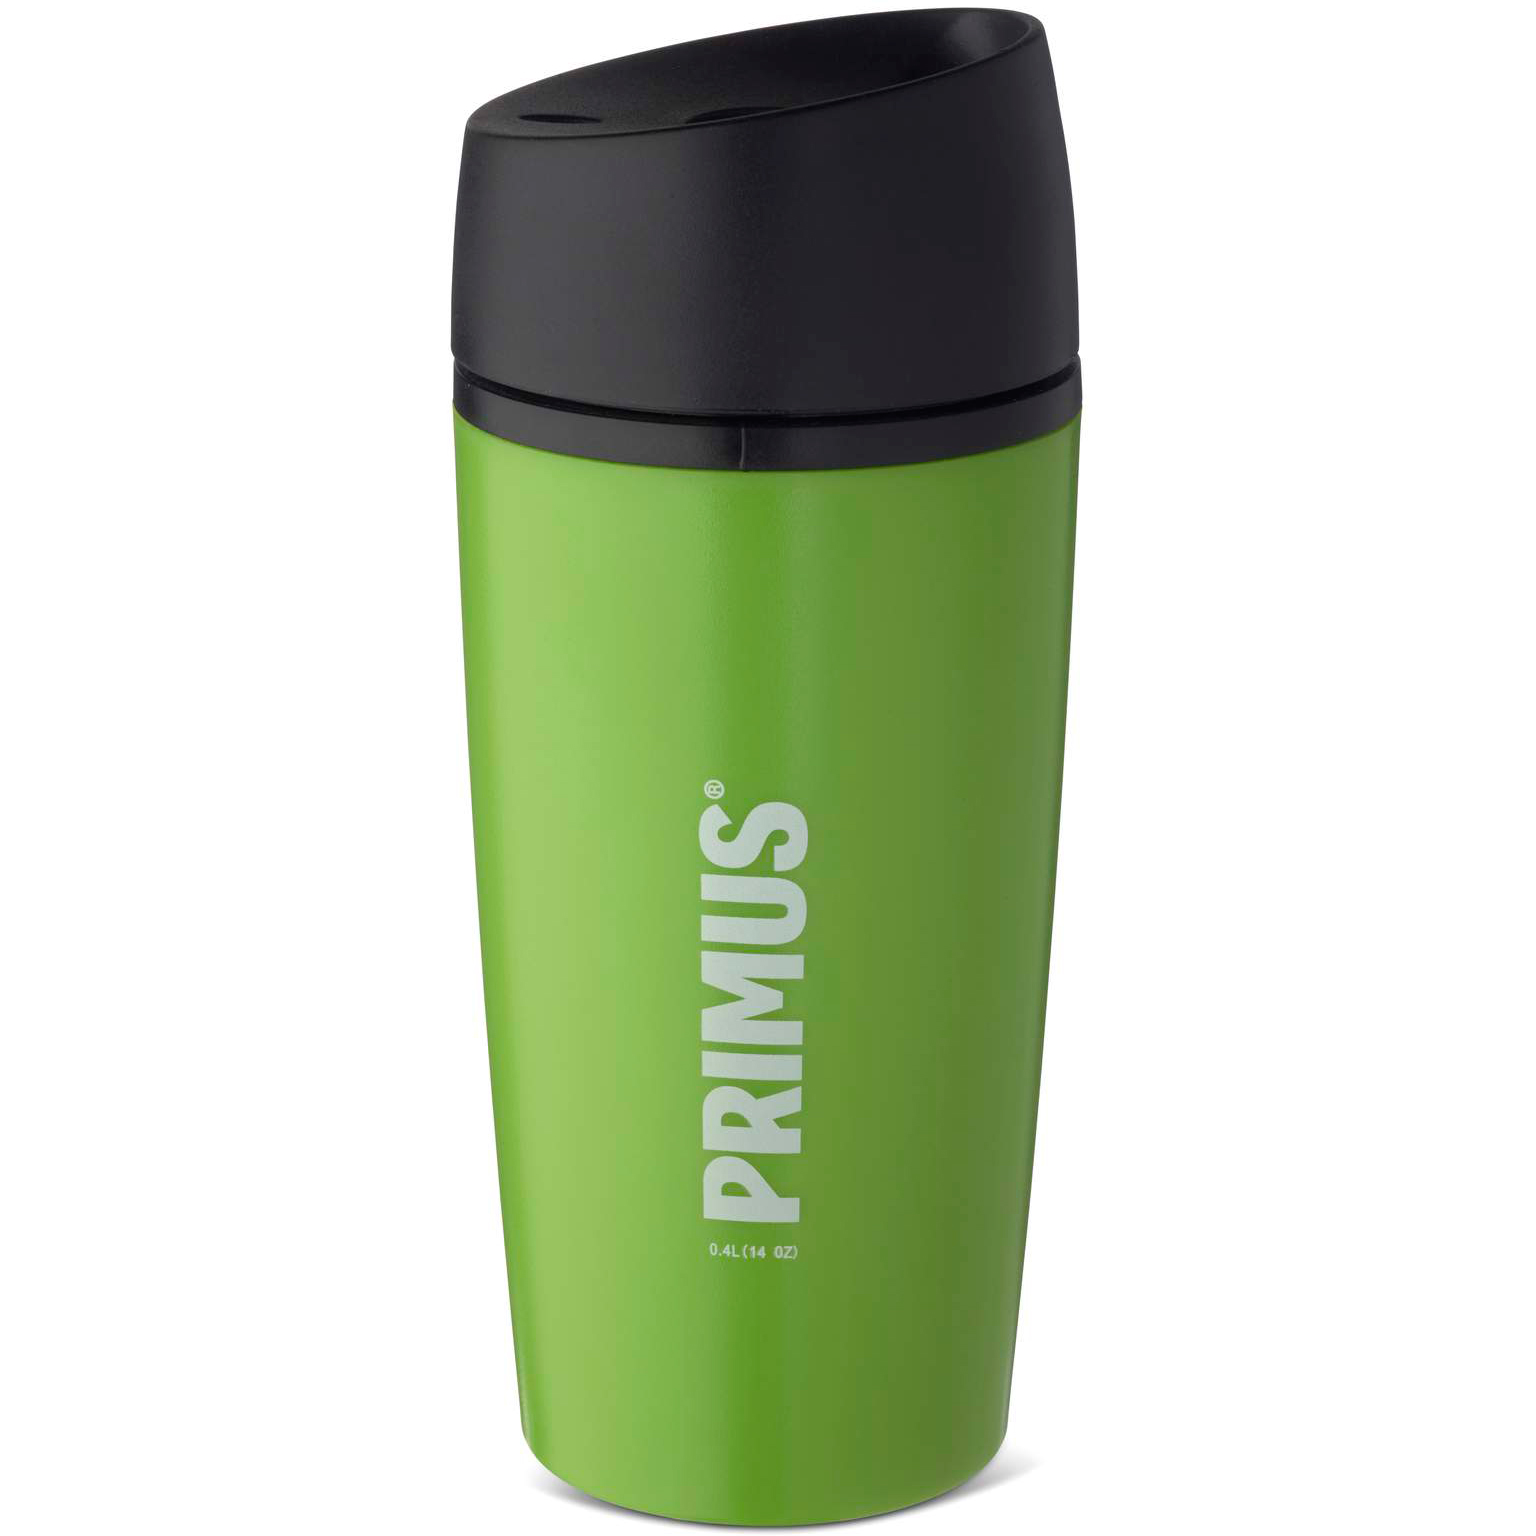 Productfoto van Primus Commuter Mug 0.4 Liter - leaf green